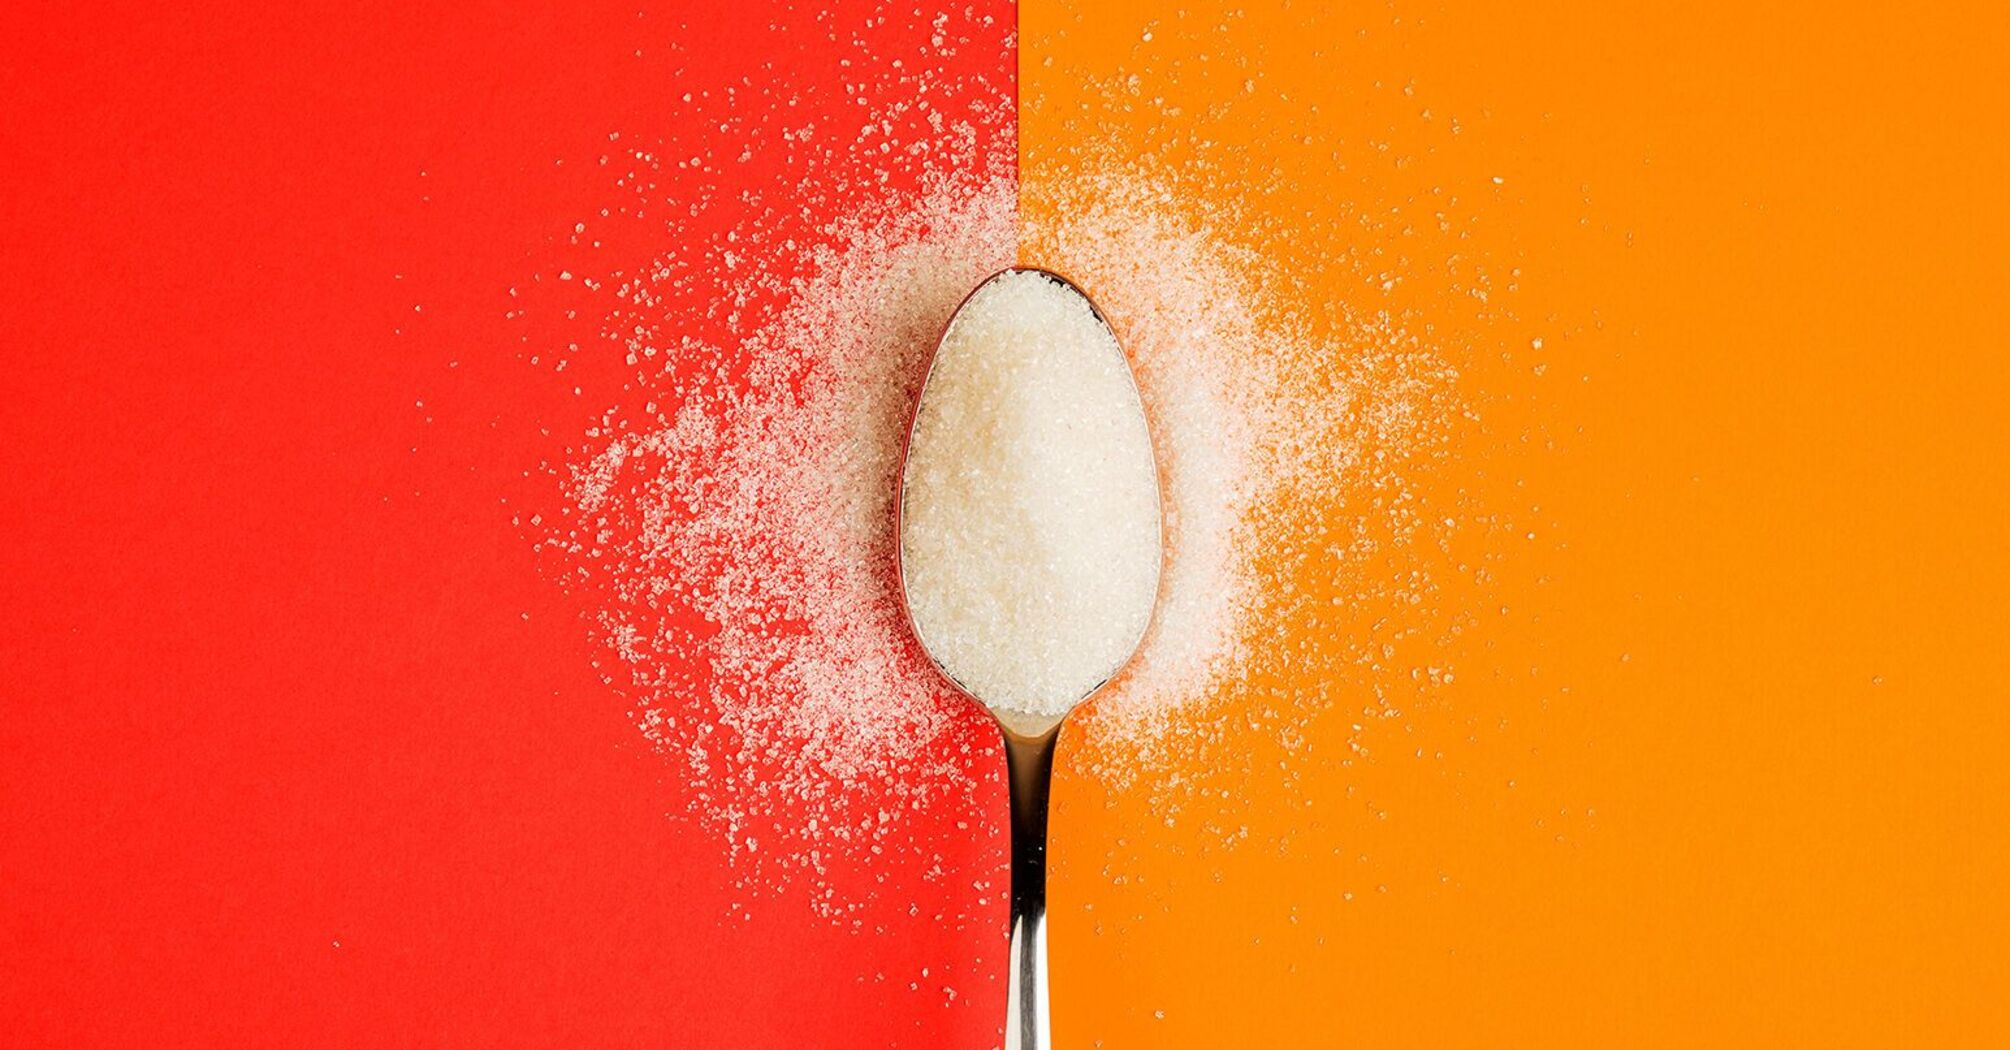 Is sprinkled sugar for good or bad?